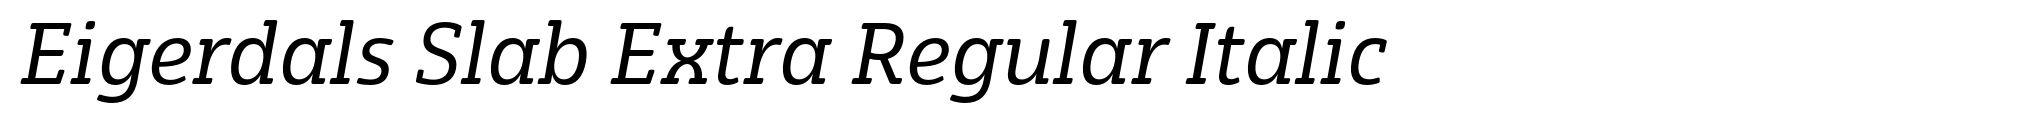 Eigerdals Slab Extra Regular Italic image